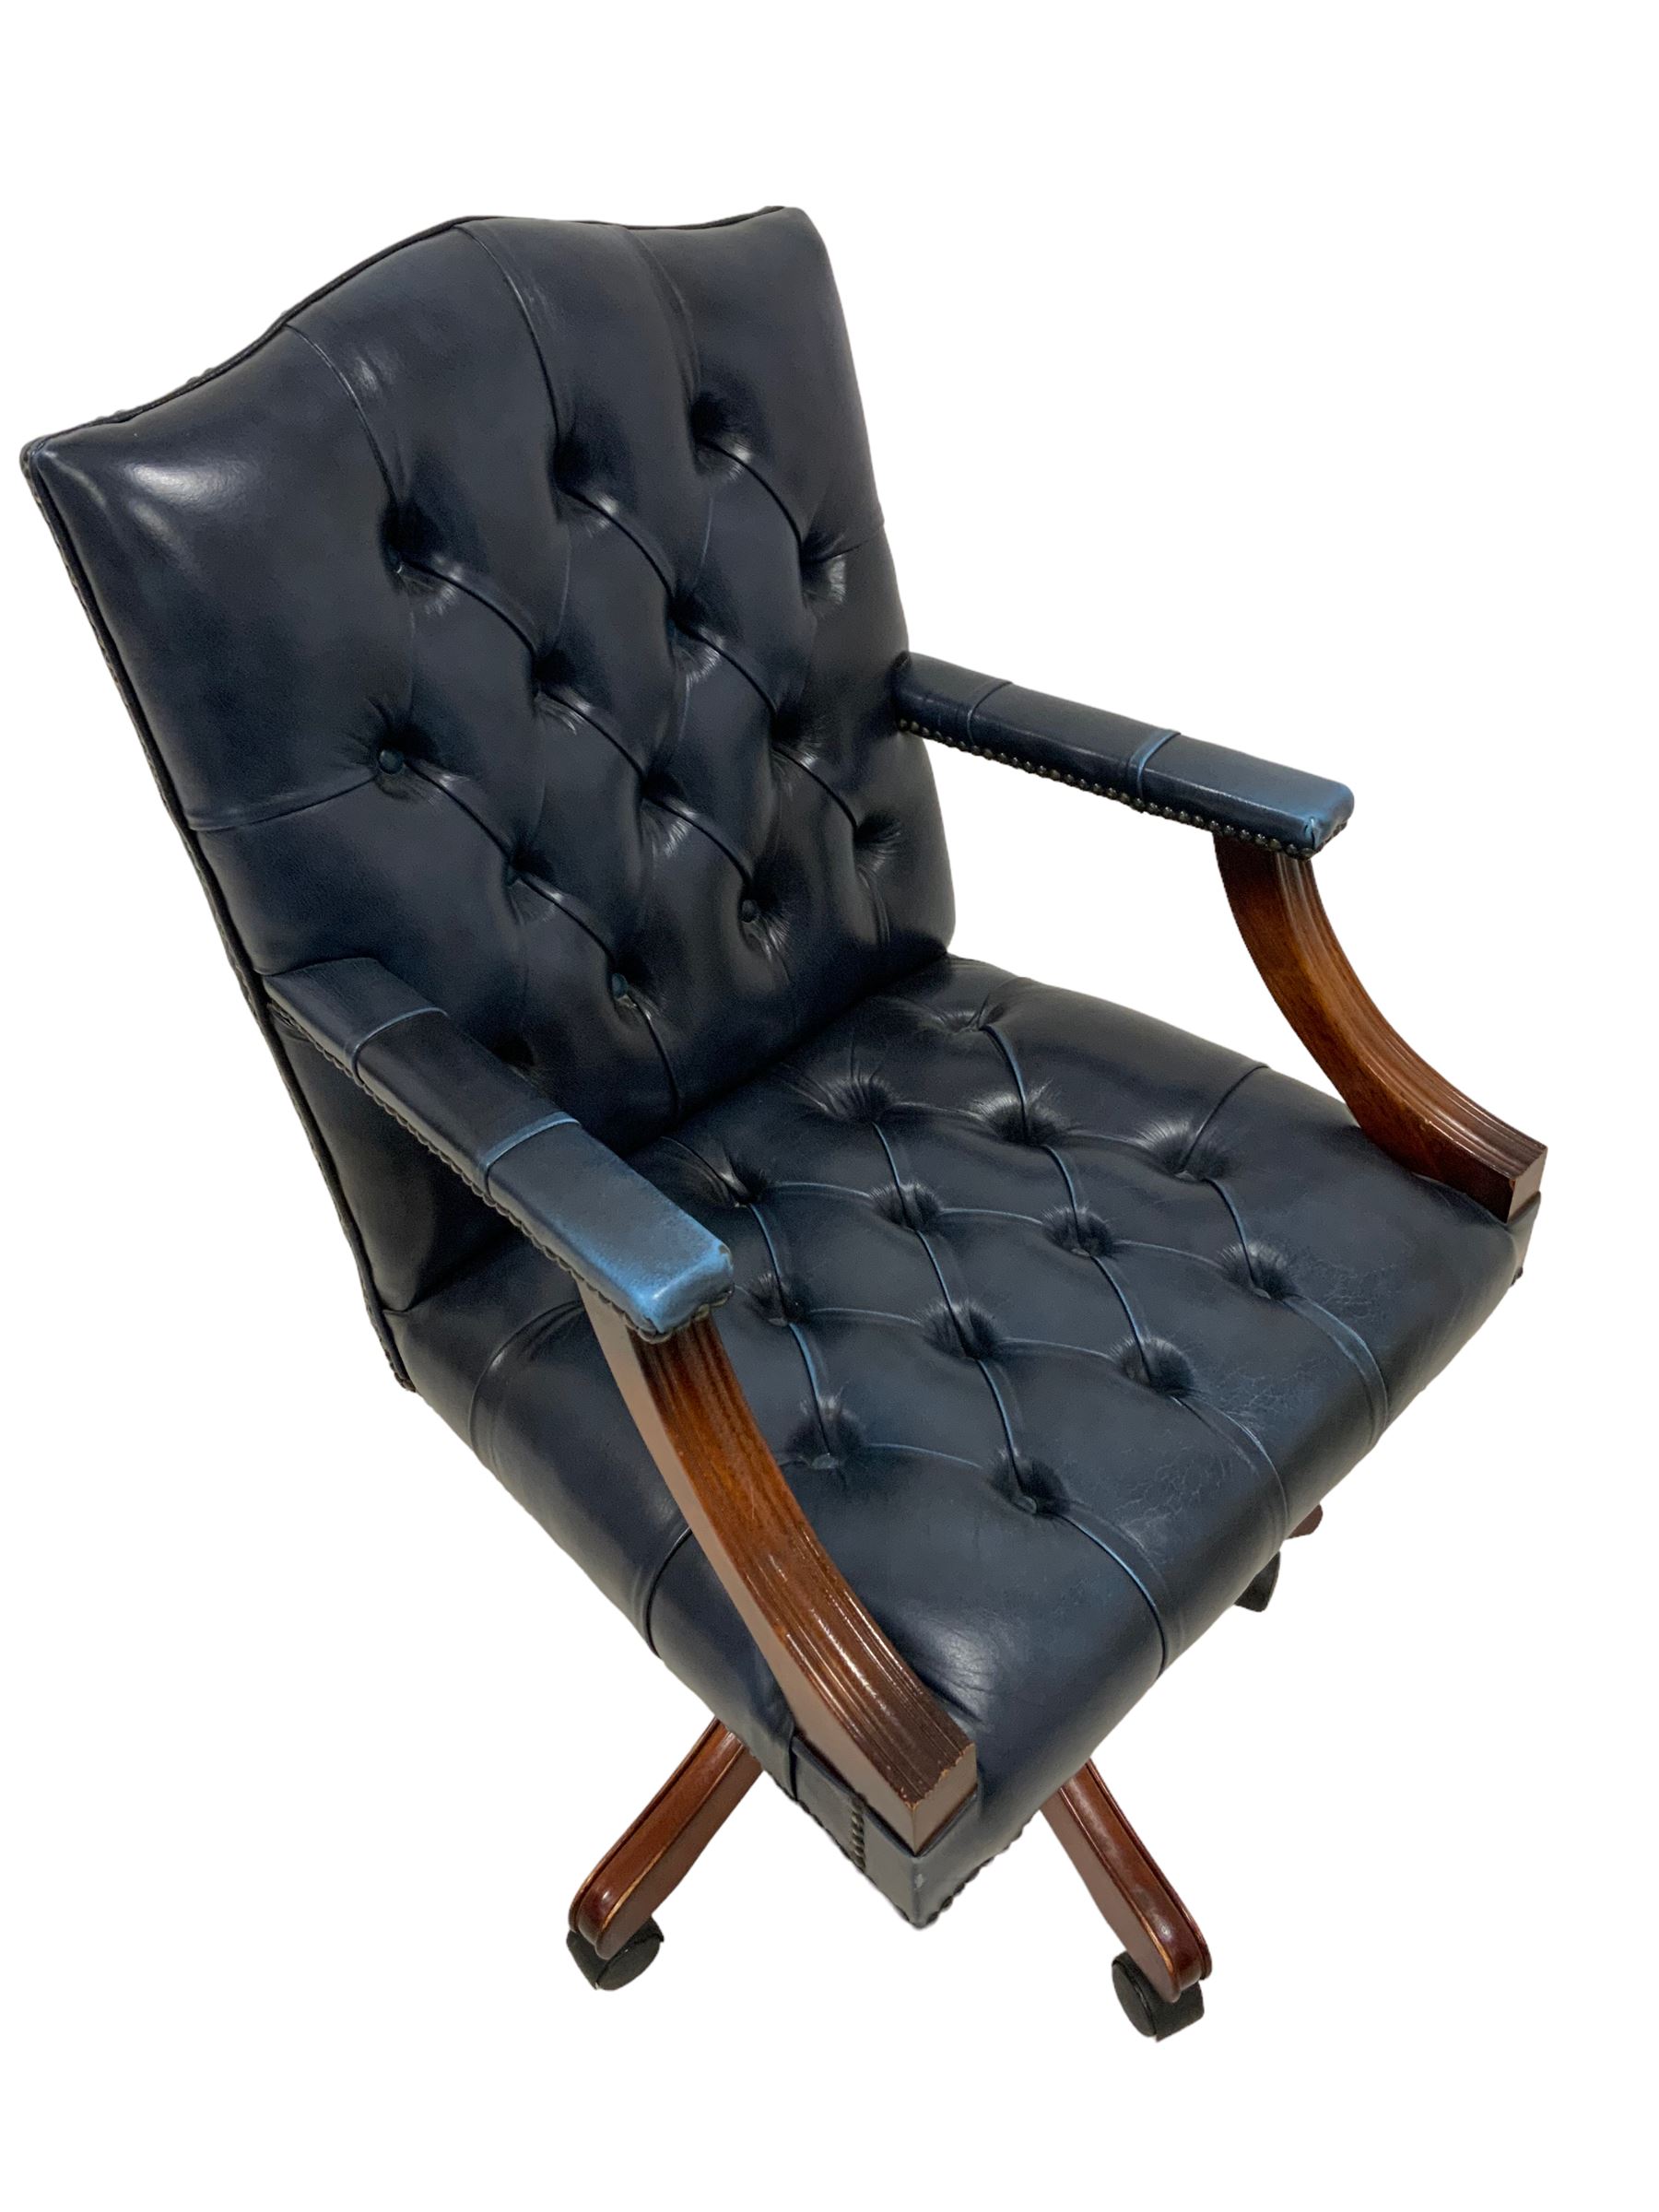 Gainsborough design swivel desk chair - Image 2 of 4